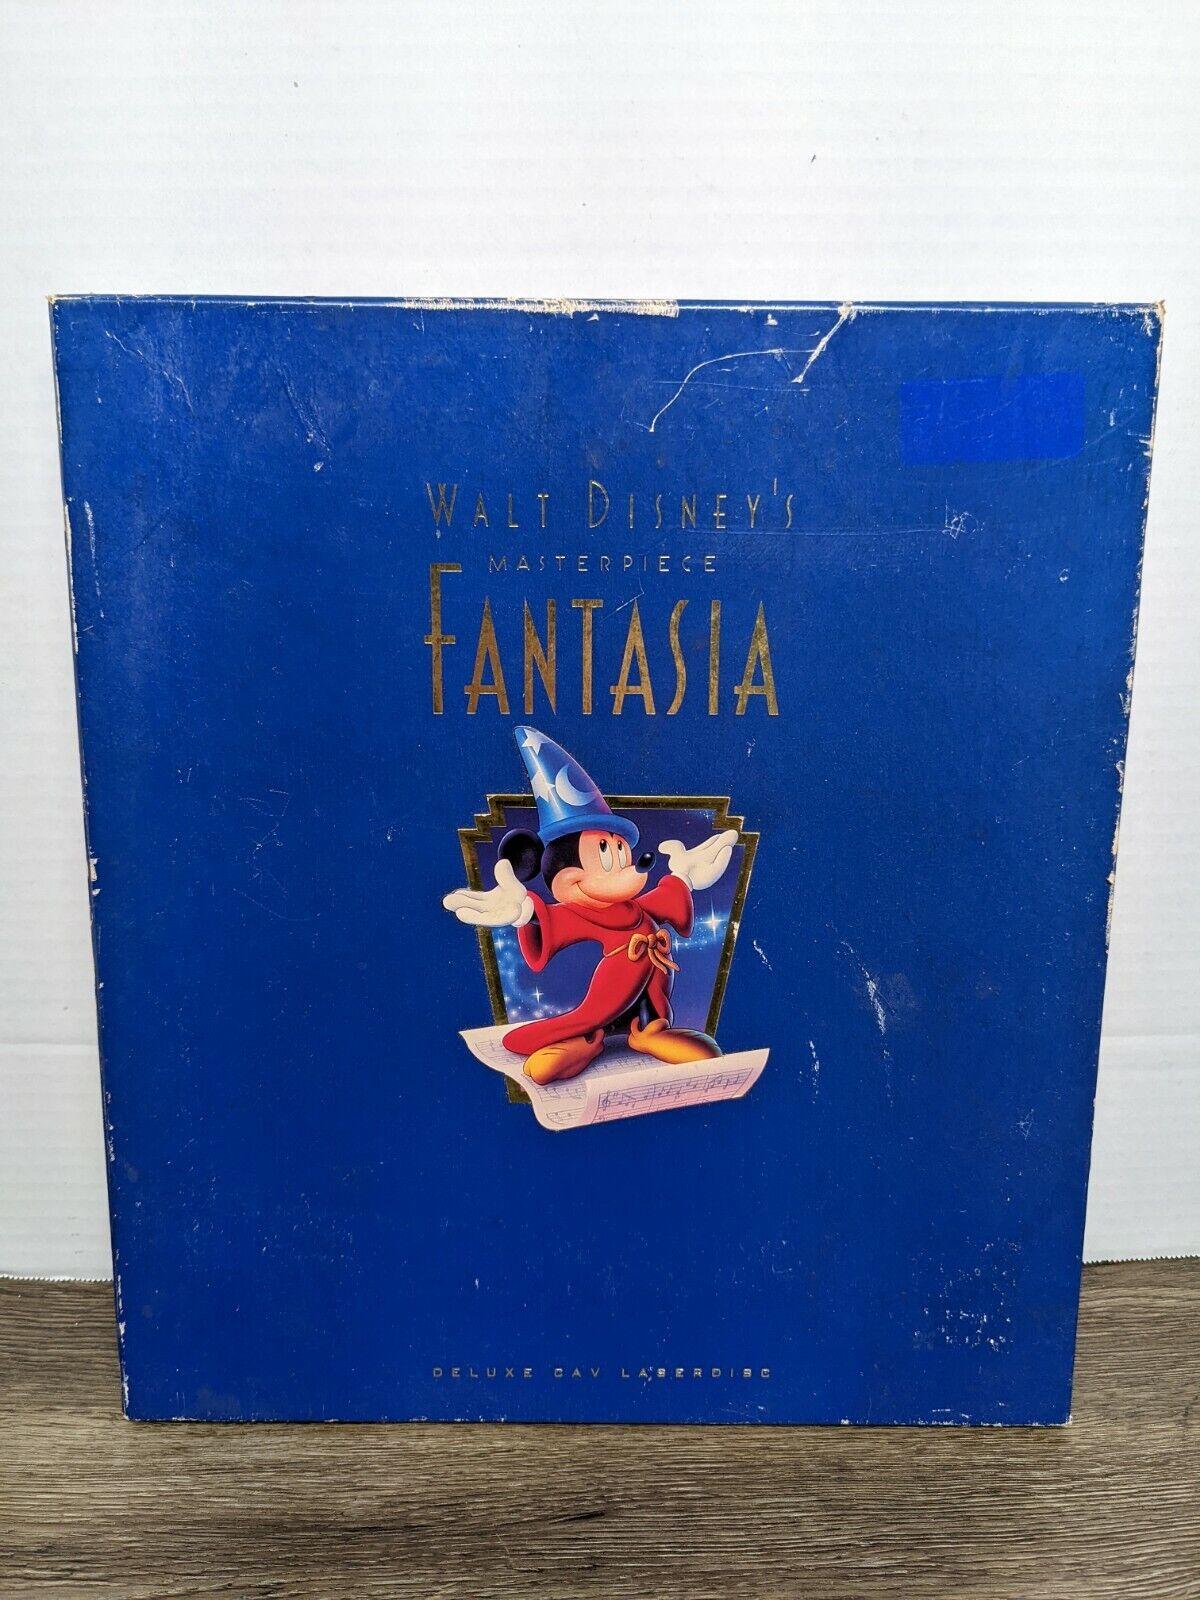 Walt Disney’s Masterpiece Fantasia Deluxe Collectors Edition Laserdisc Complete